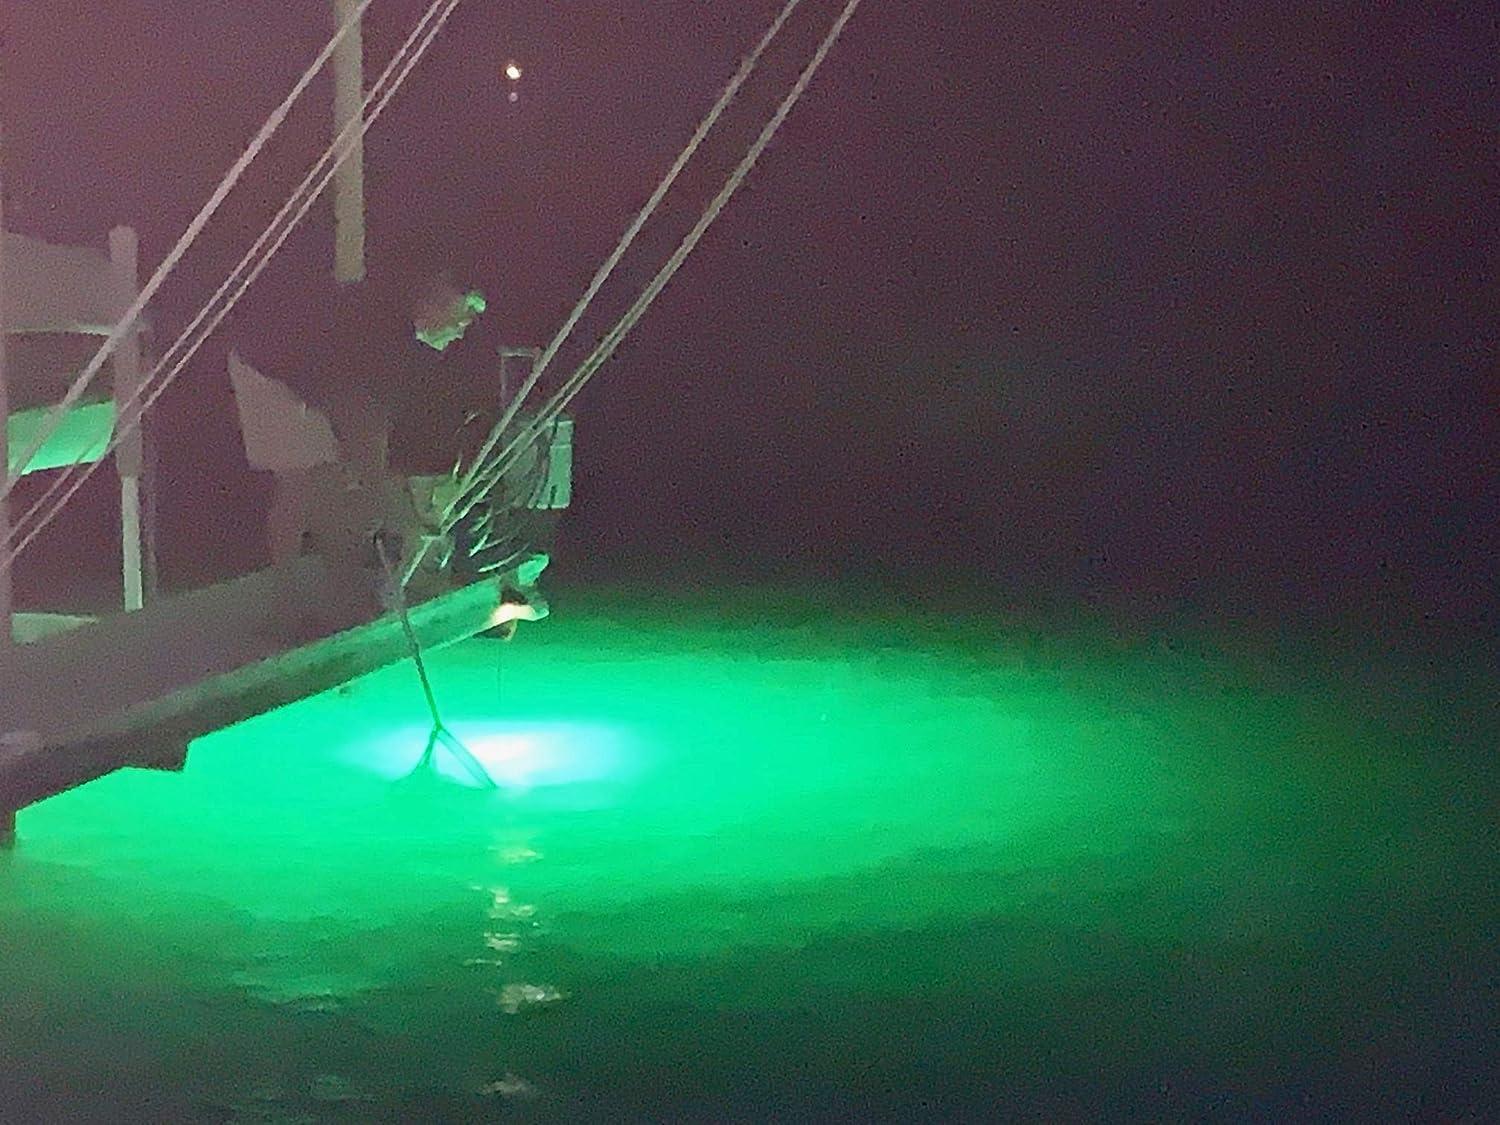 Black Night Fishing Underwater Fishing Light 15,000 LUMENS Green